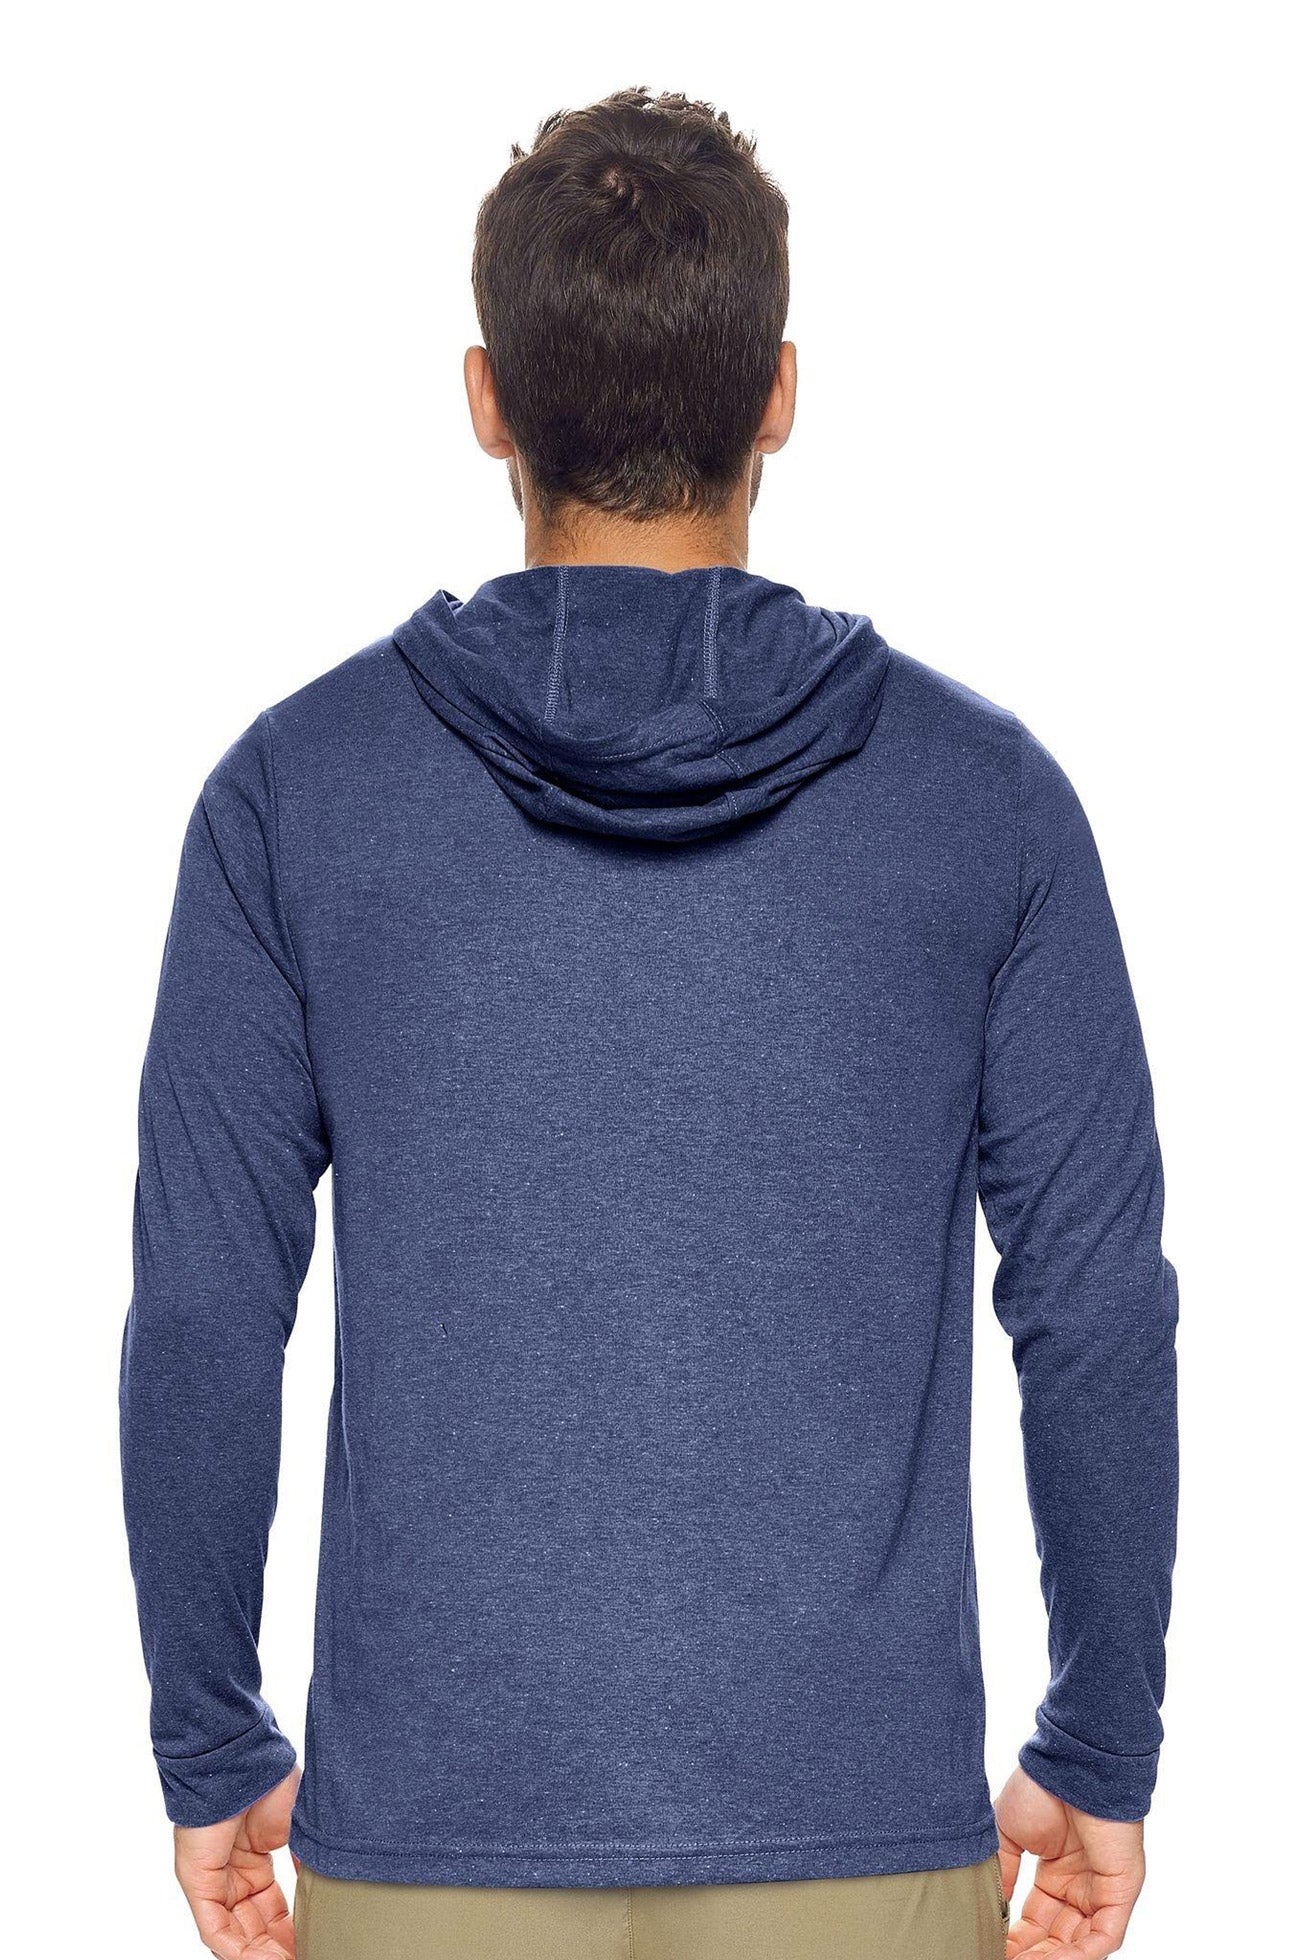 Expert Brand Wholesale Men's Hoodie Performance Active Shirt in Dark Heather Navy Image 3#dark-heather-navy